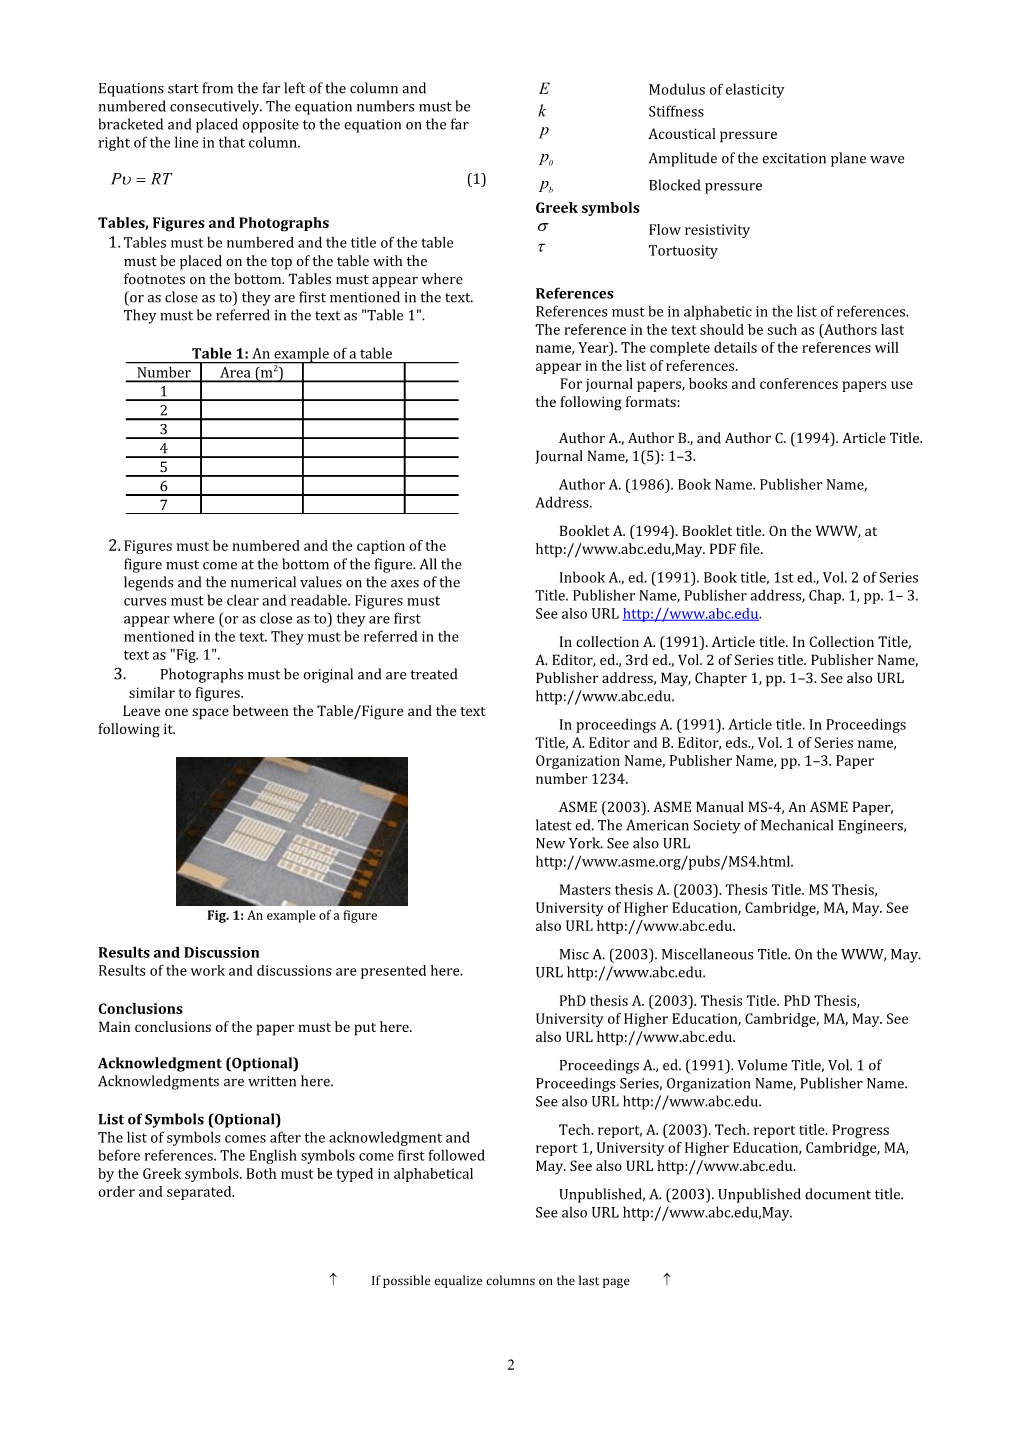 WALIA- Paper Formatting and Preparation